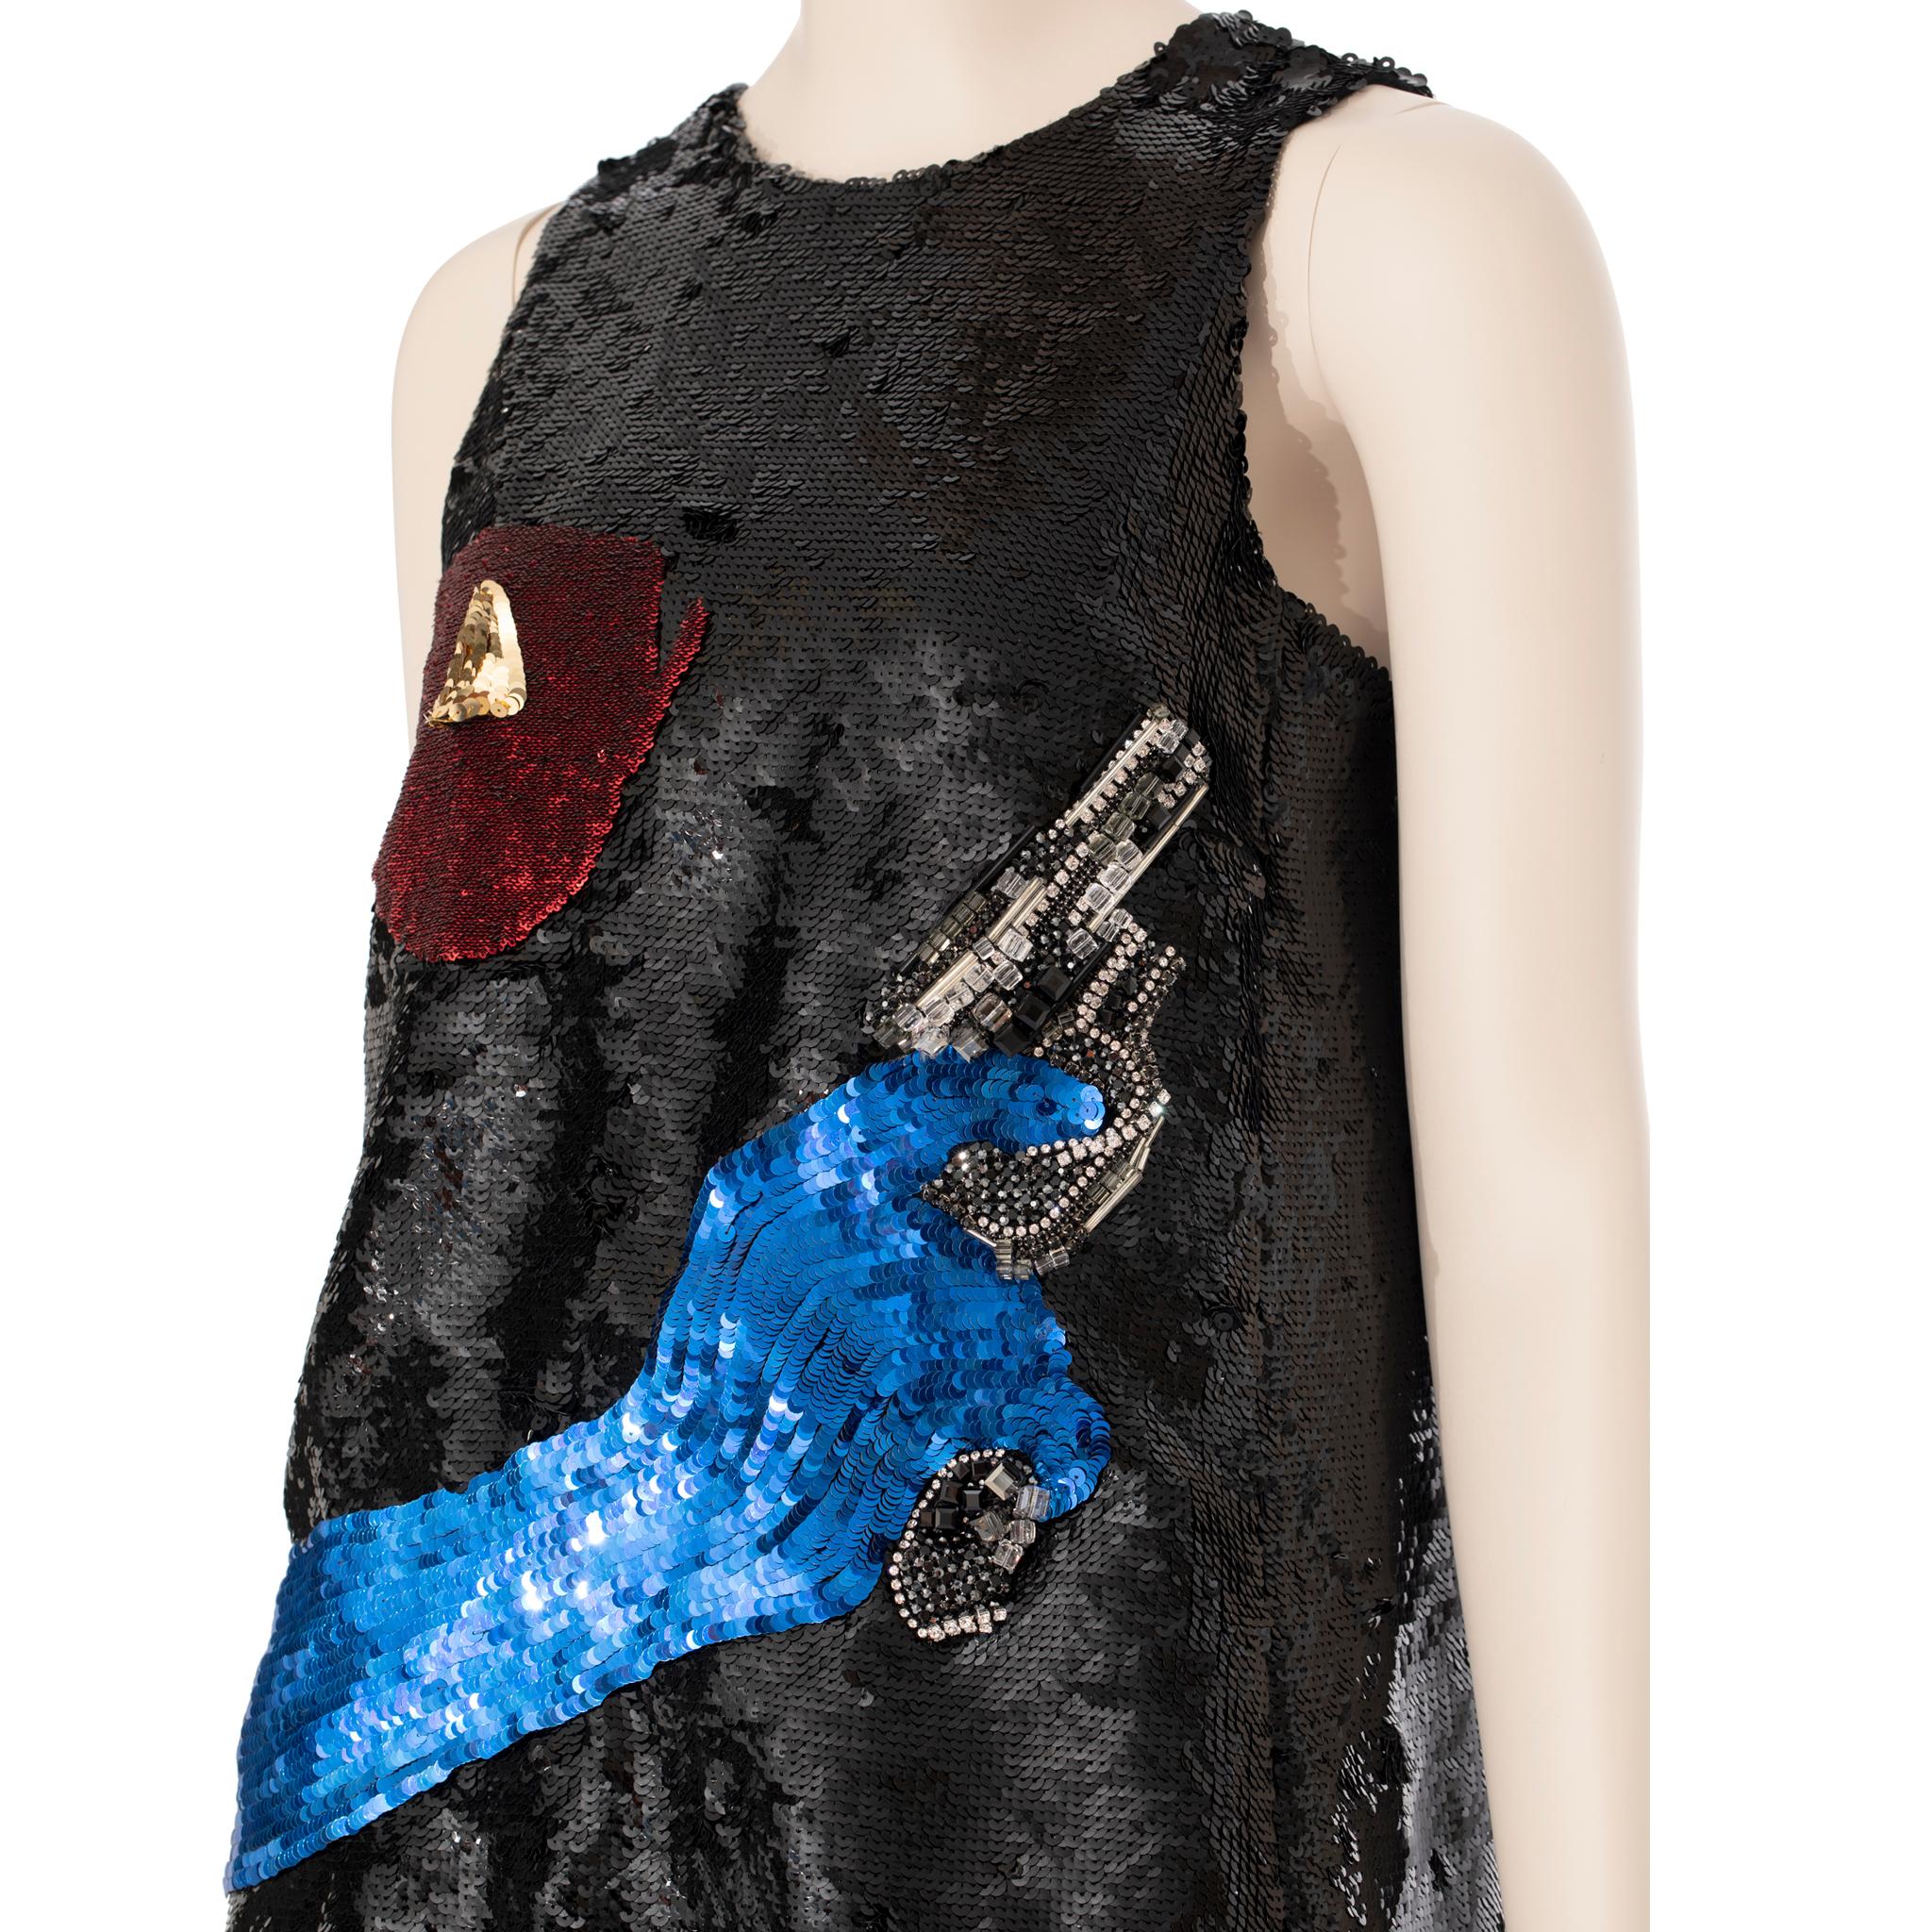 Saint Laurent X John Baldessari by Hedi Slimane Sequin Mini Dress Look #13 For Sale 2